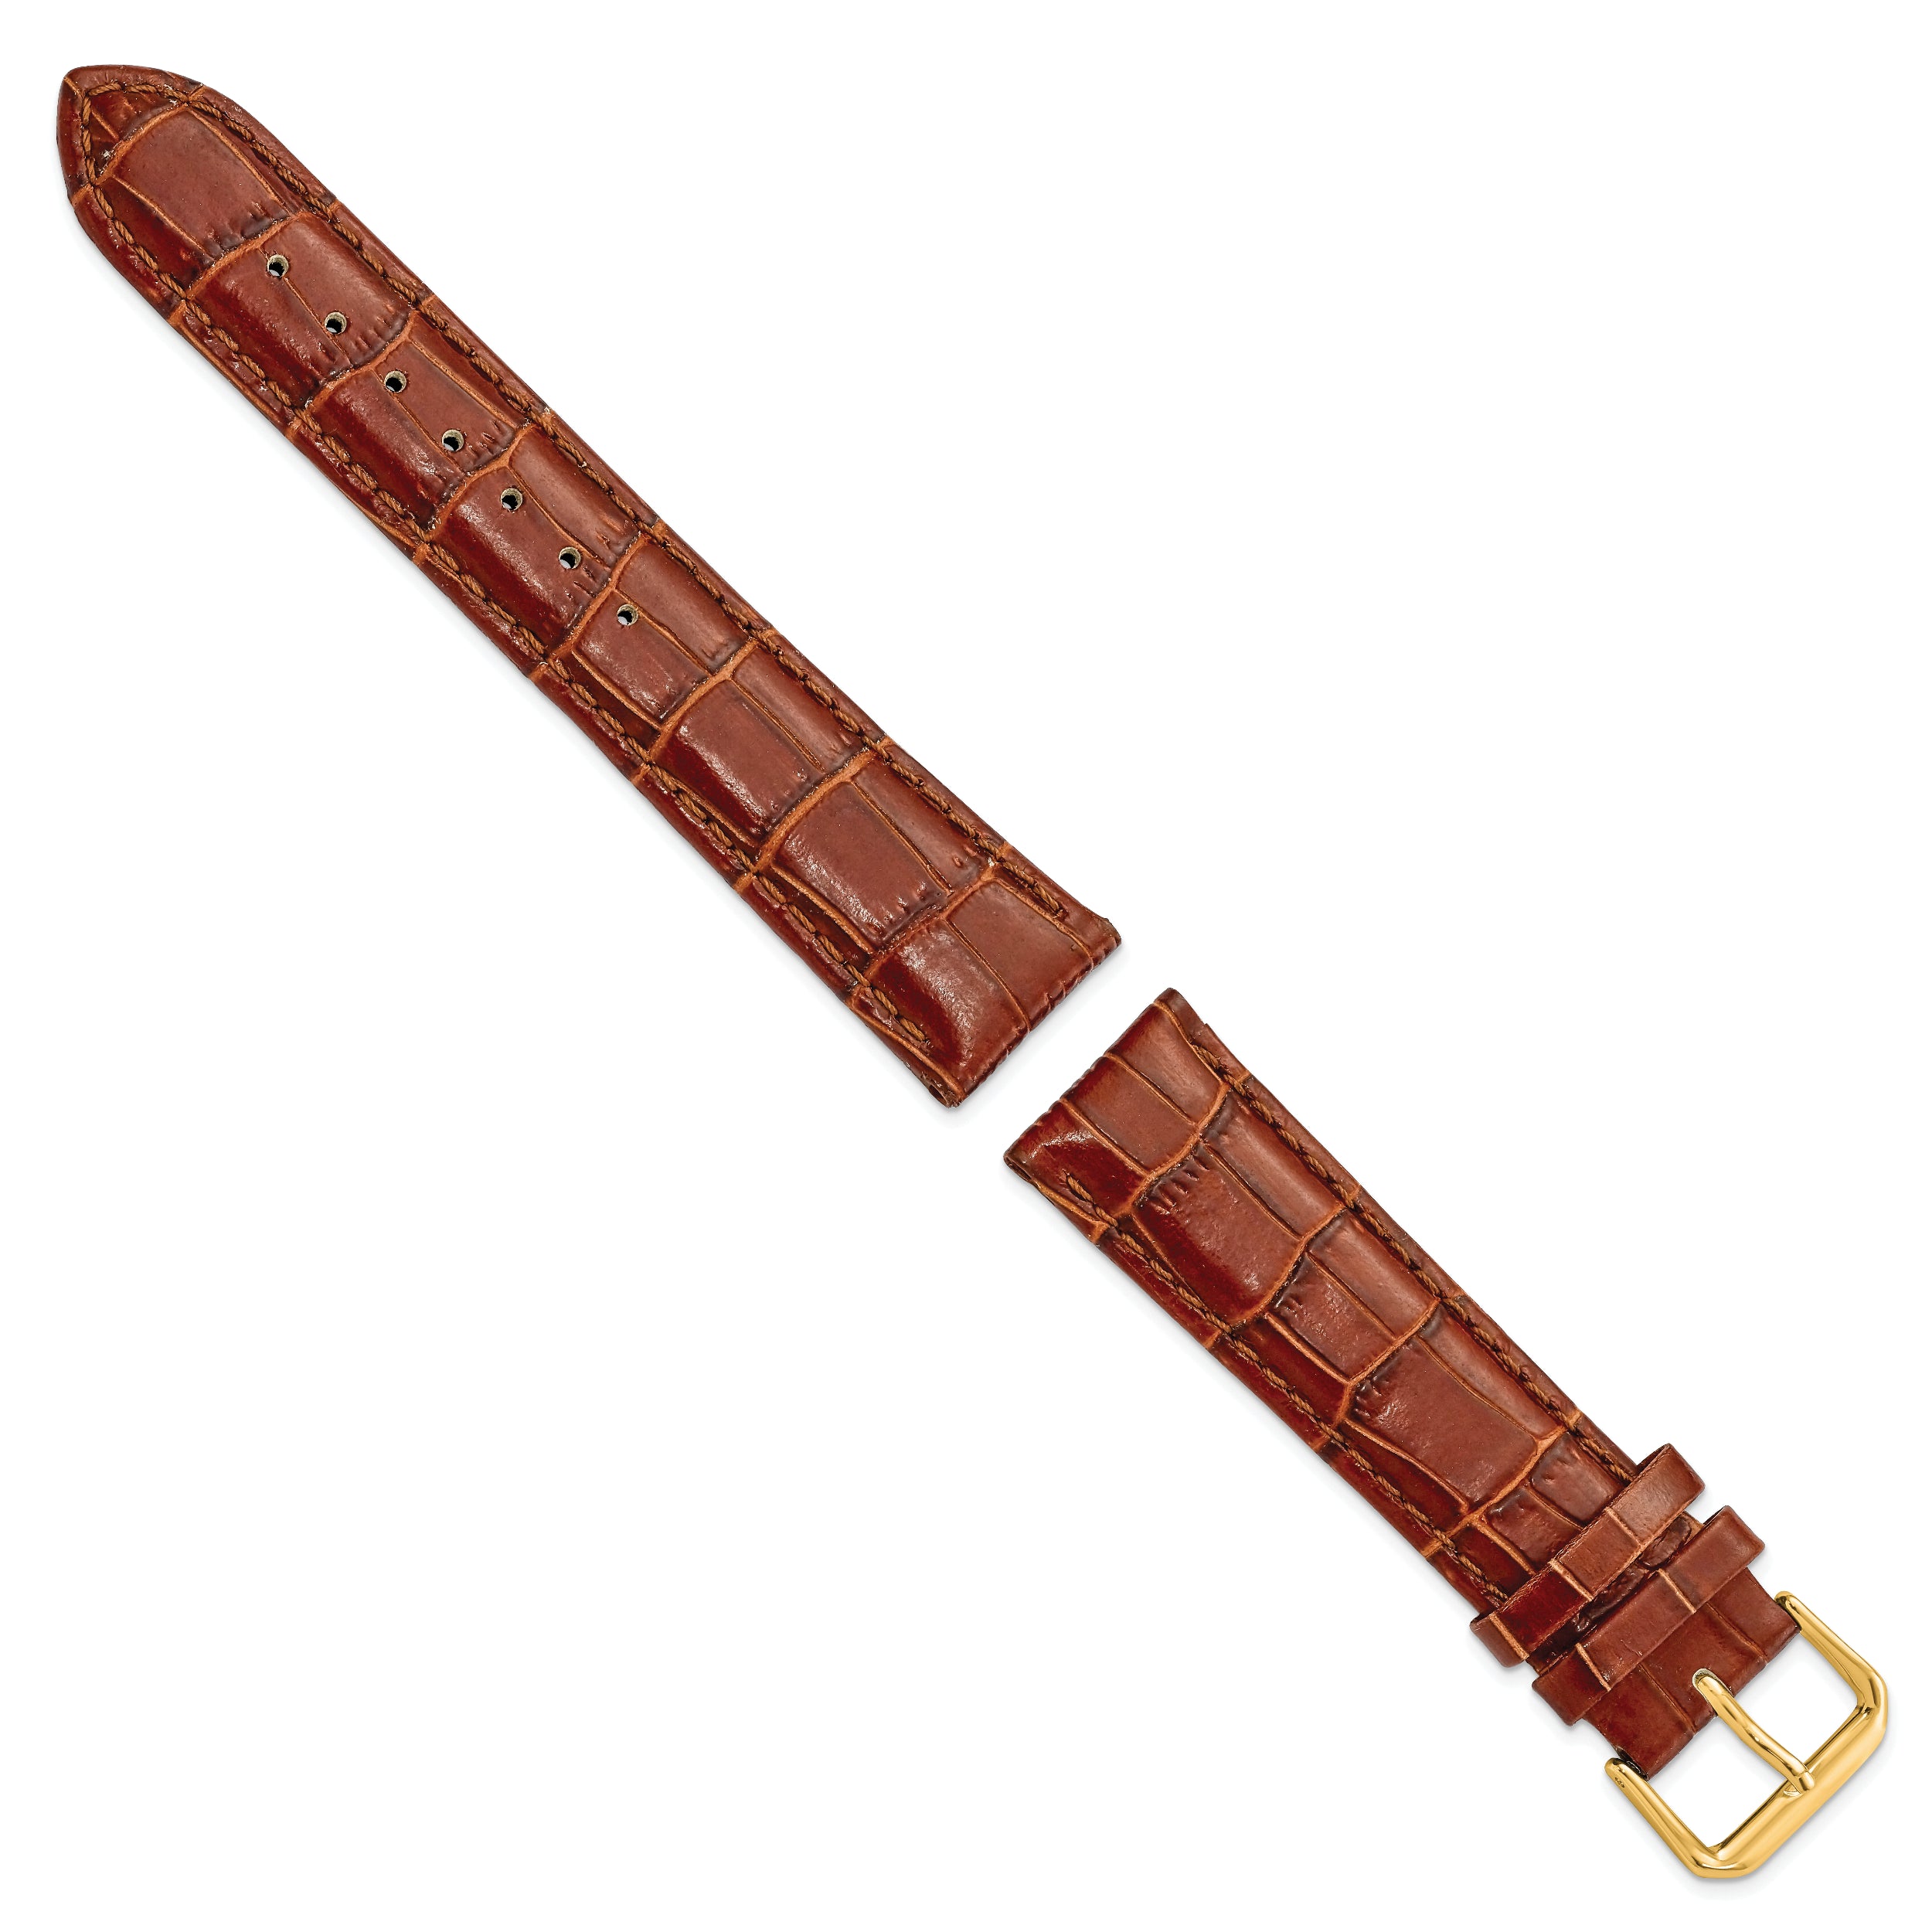 10mm Havana Crocodile Grain Leather with Dark Stitching and Gold-tone Buckle 6.75 inch Watch Band